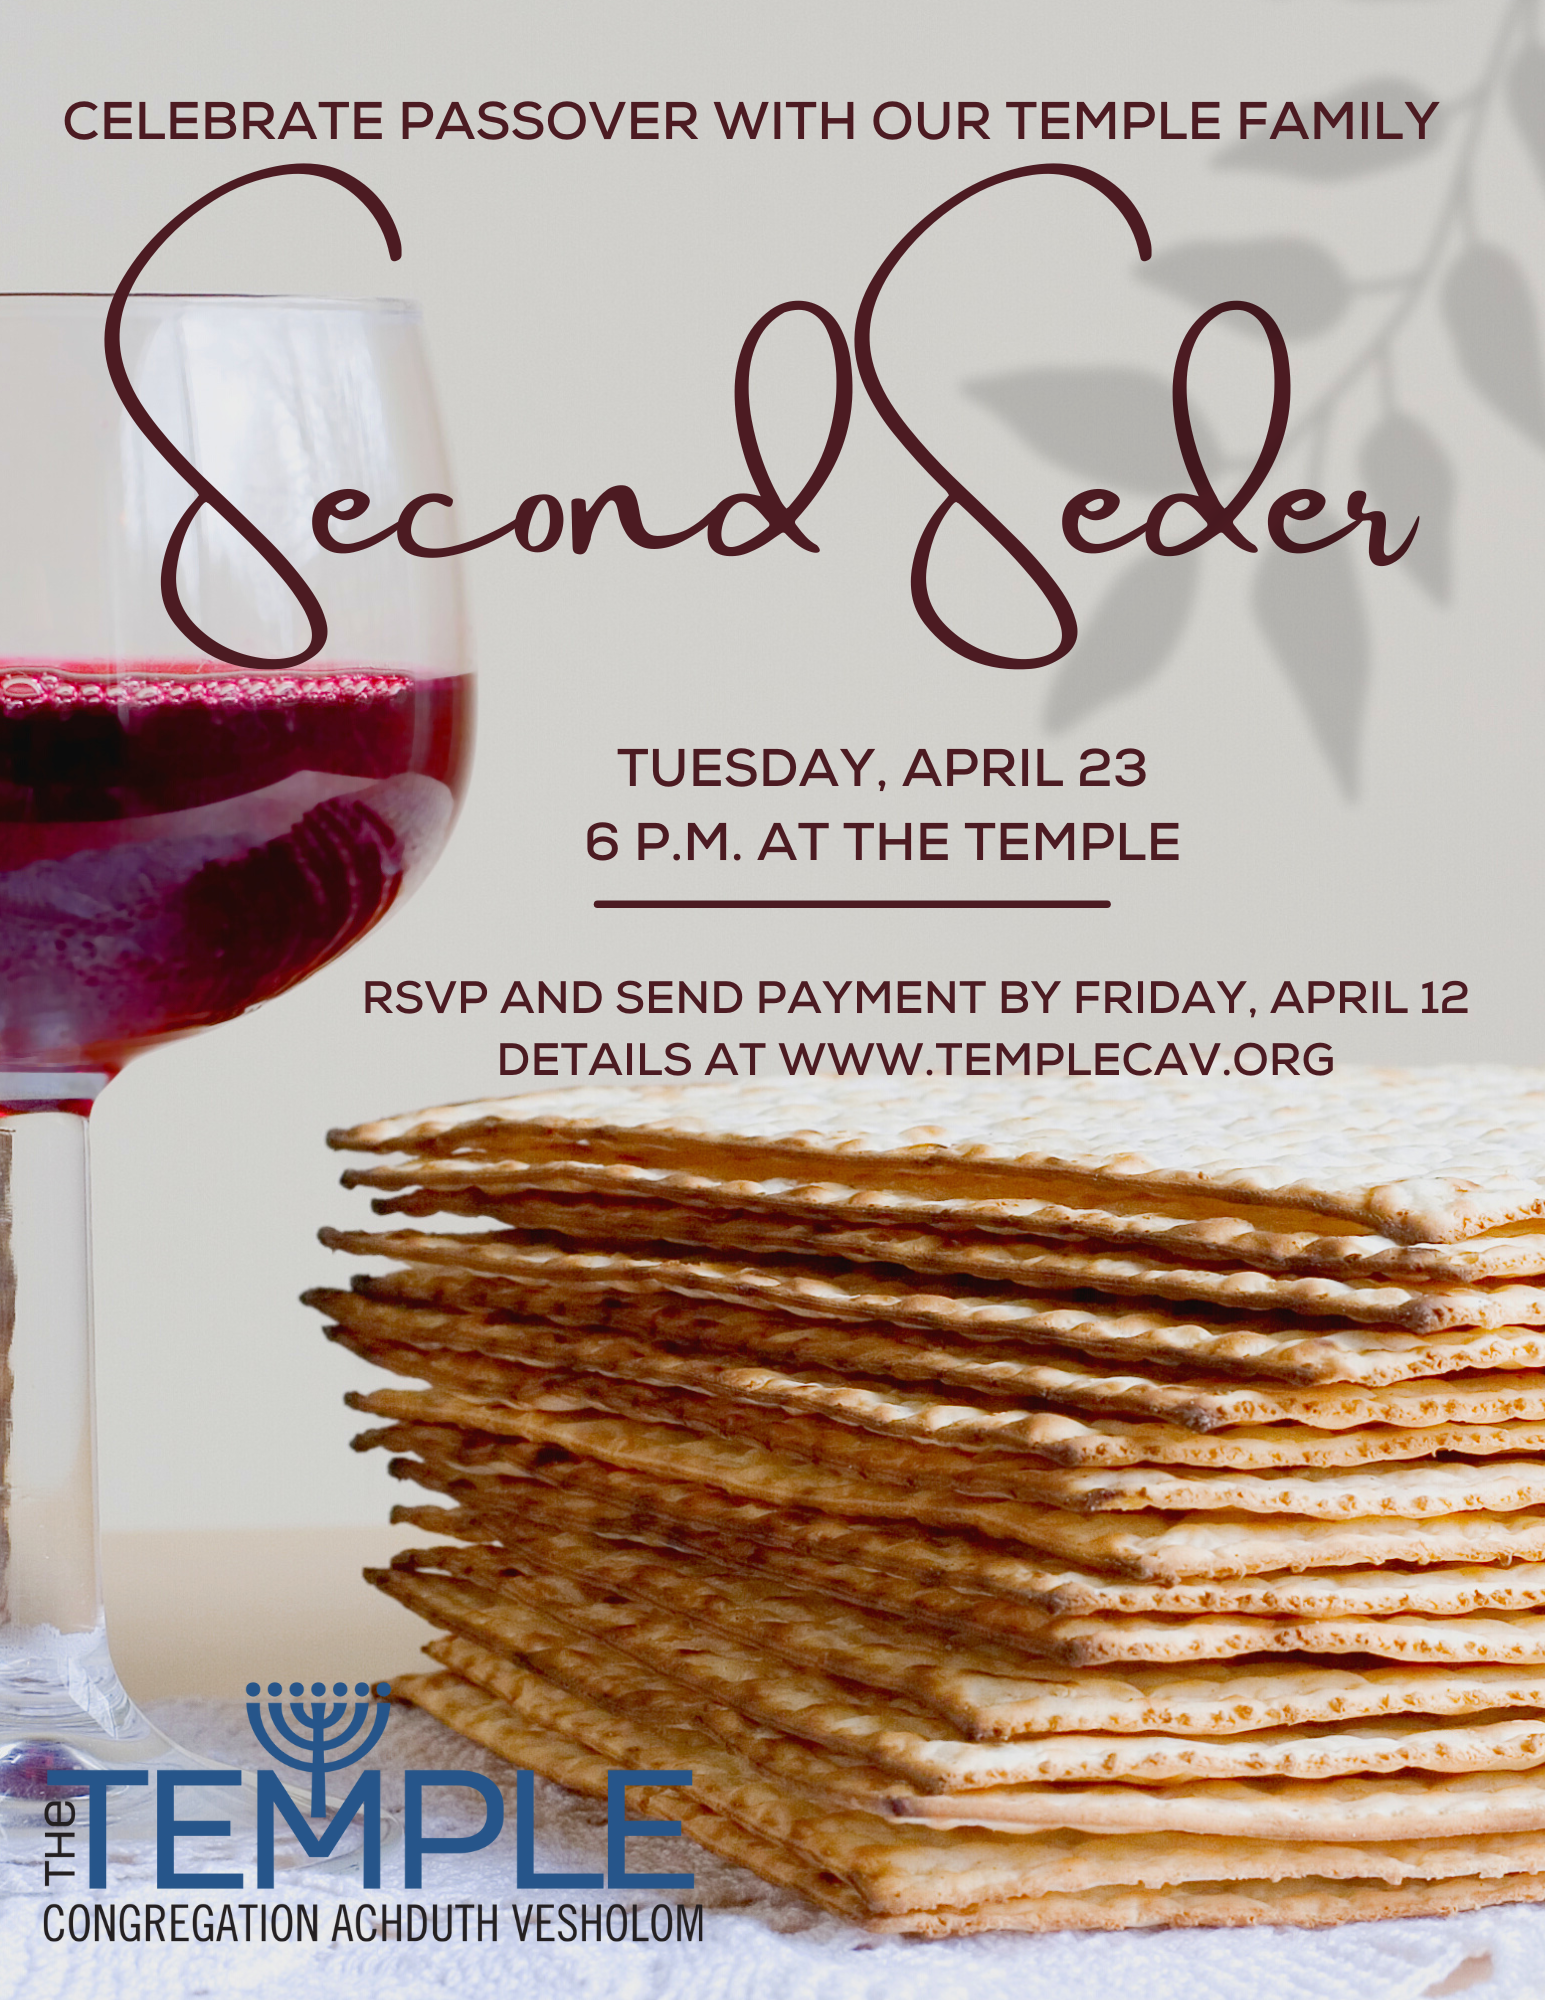 Second Seder